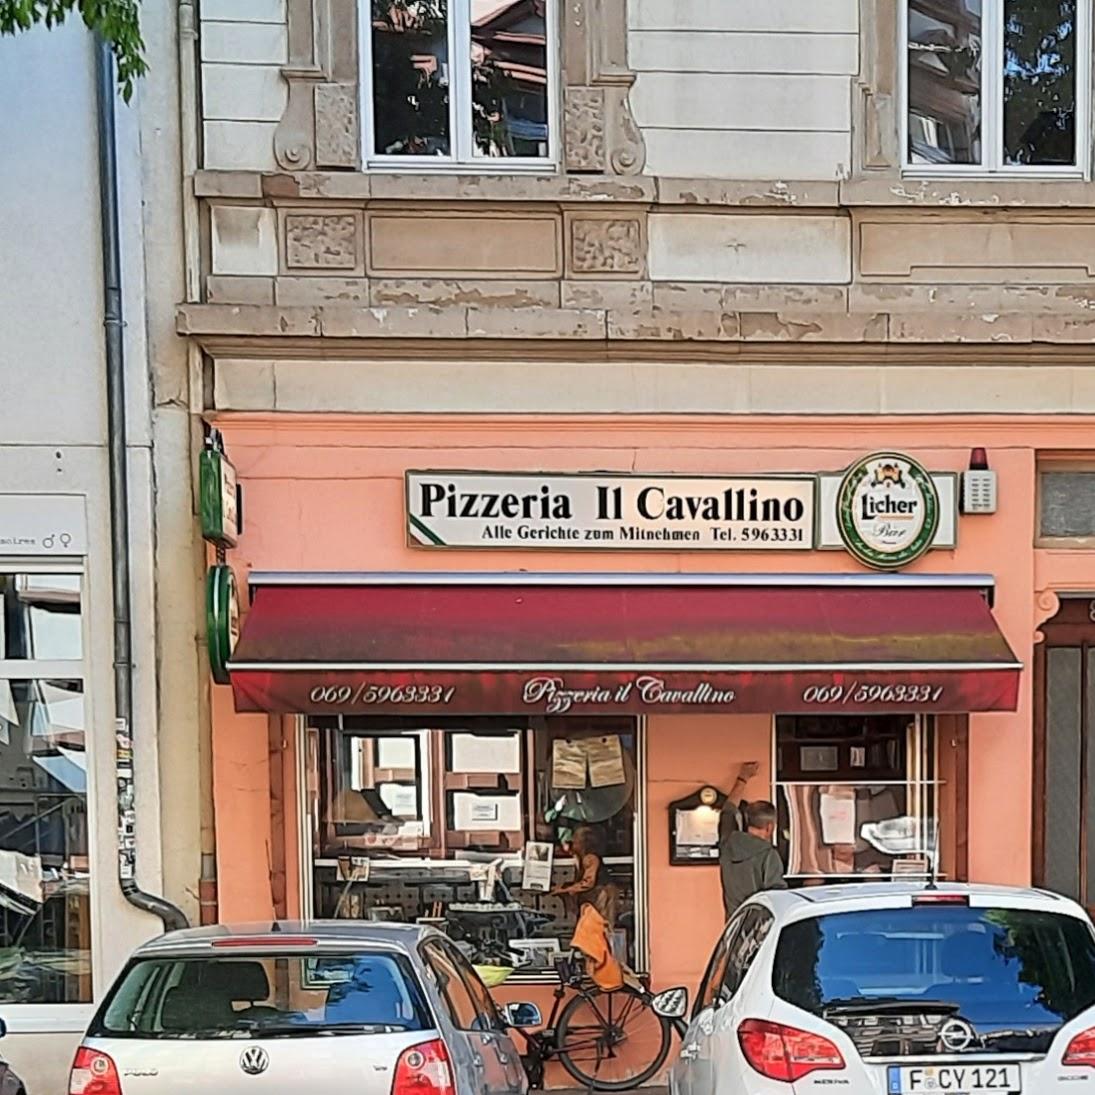 Restaurant "Pizzeria il Cavallino" in Frankfurt am Main